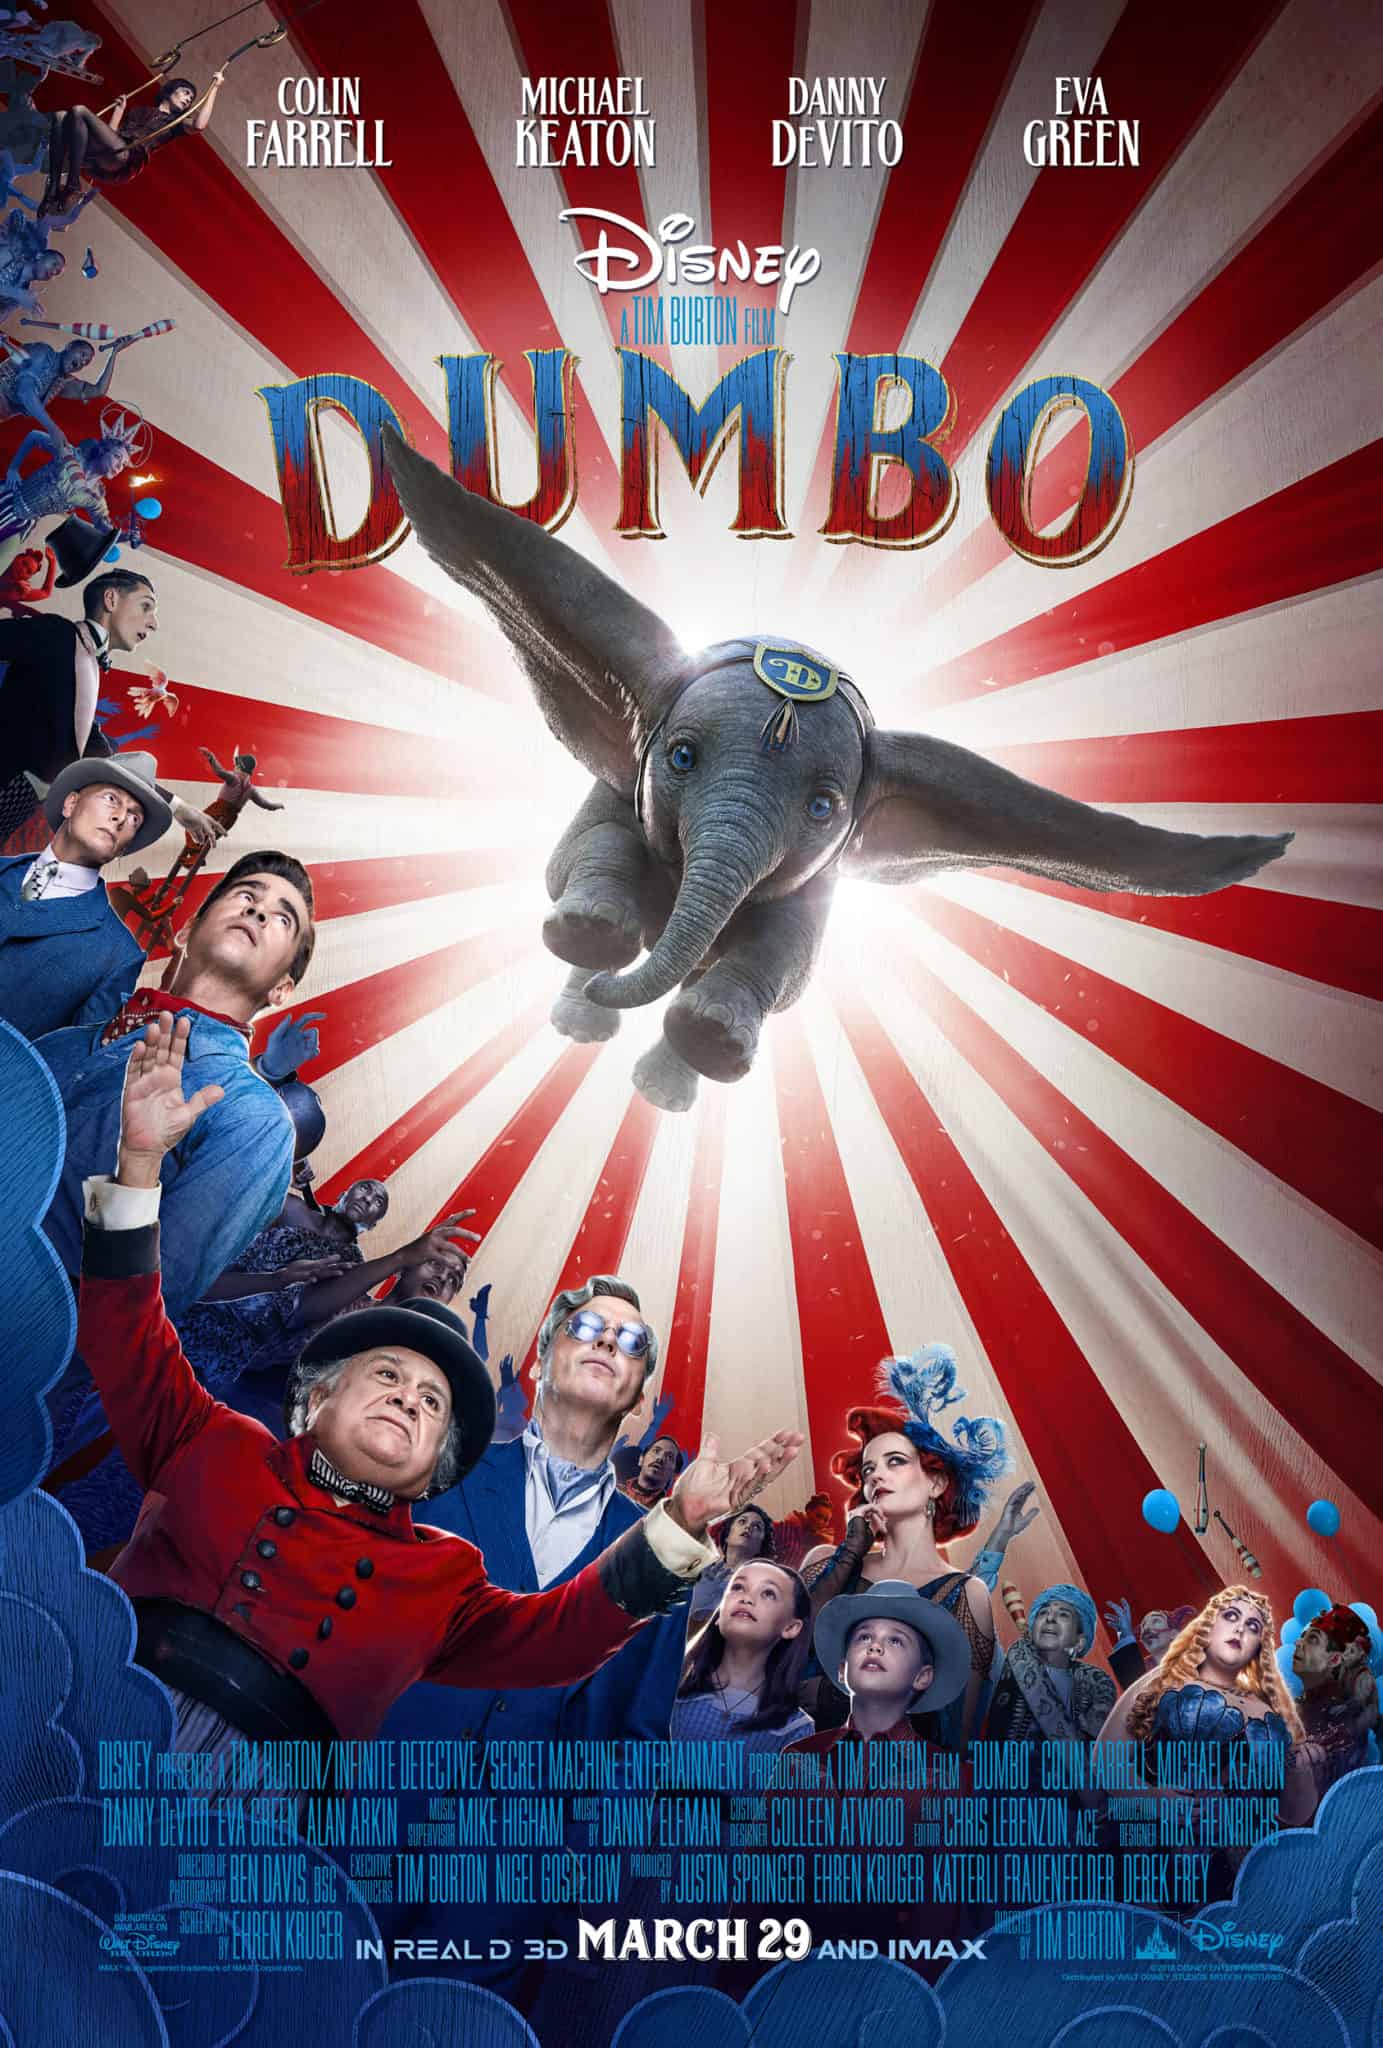 Tim Burton's remake of Disney's Dumbo